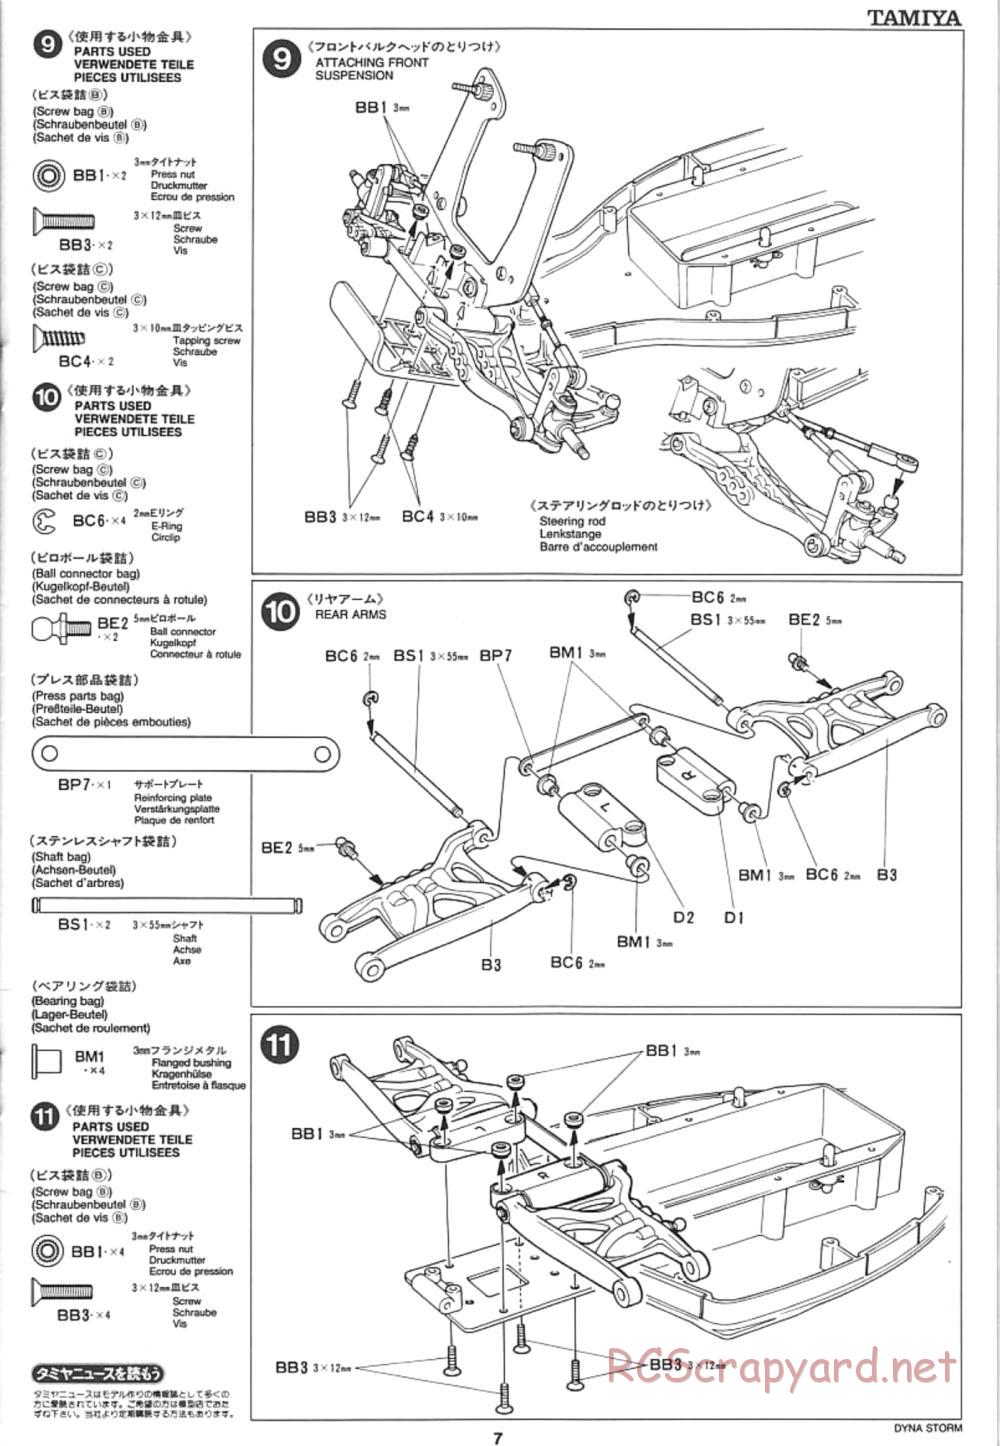 Tamiya - Dyna Storm Chassis - Manual - Page 7